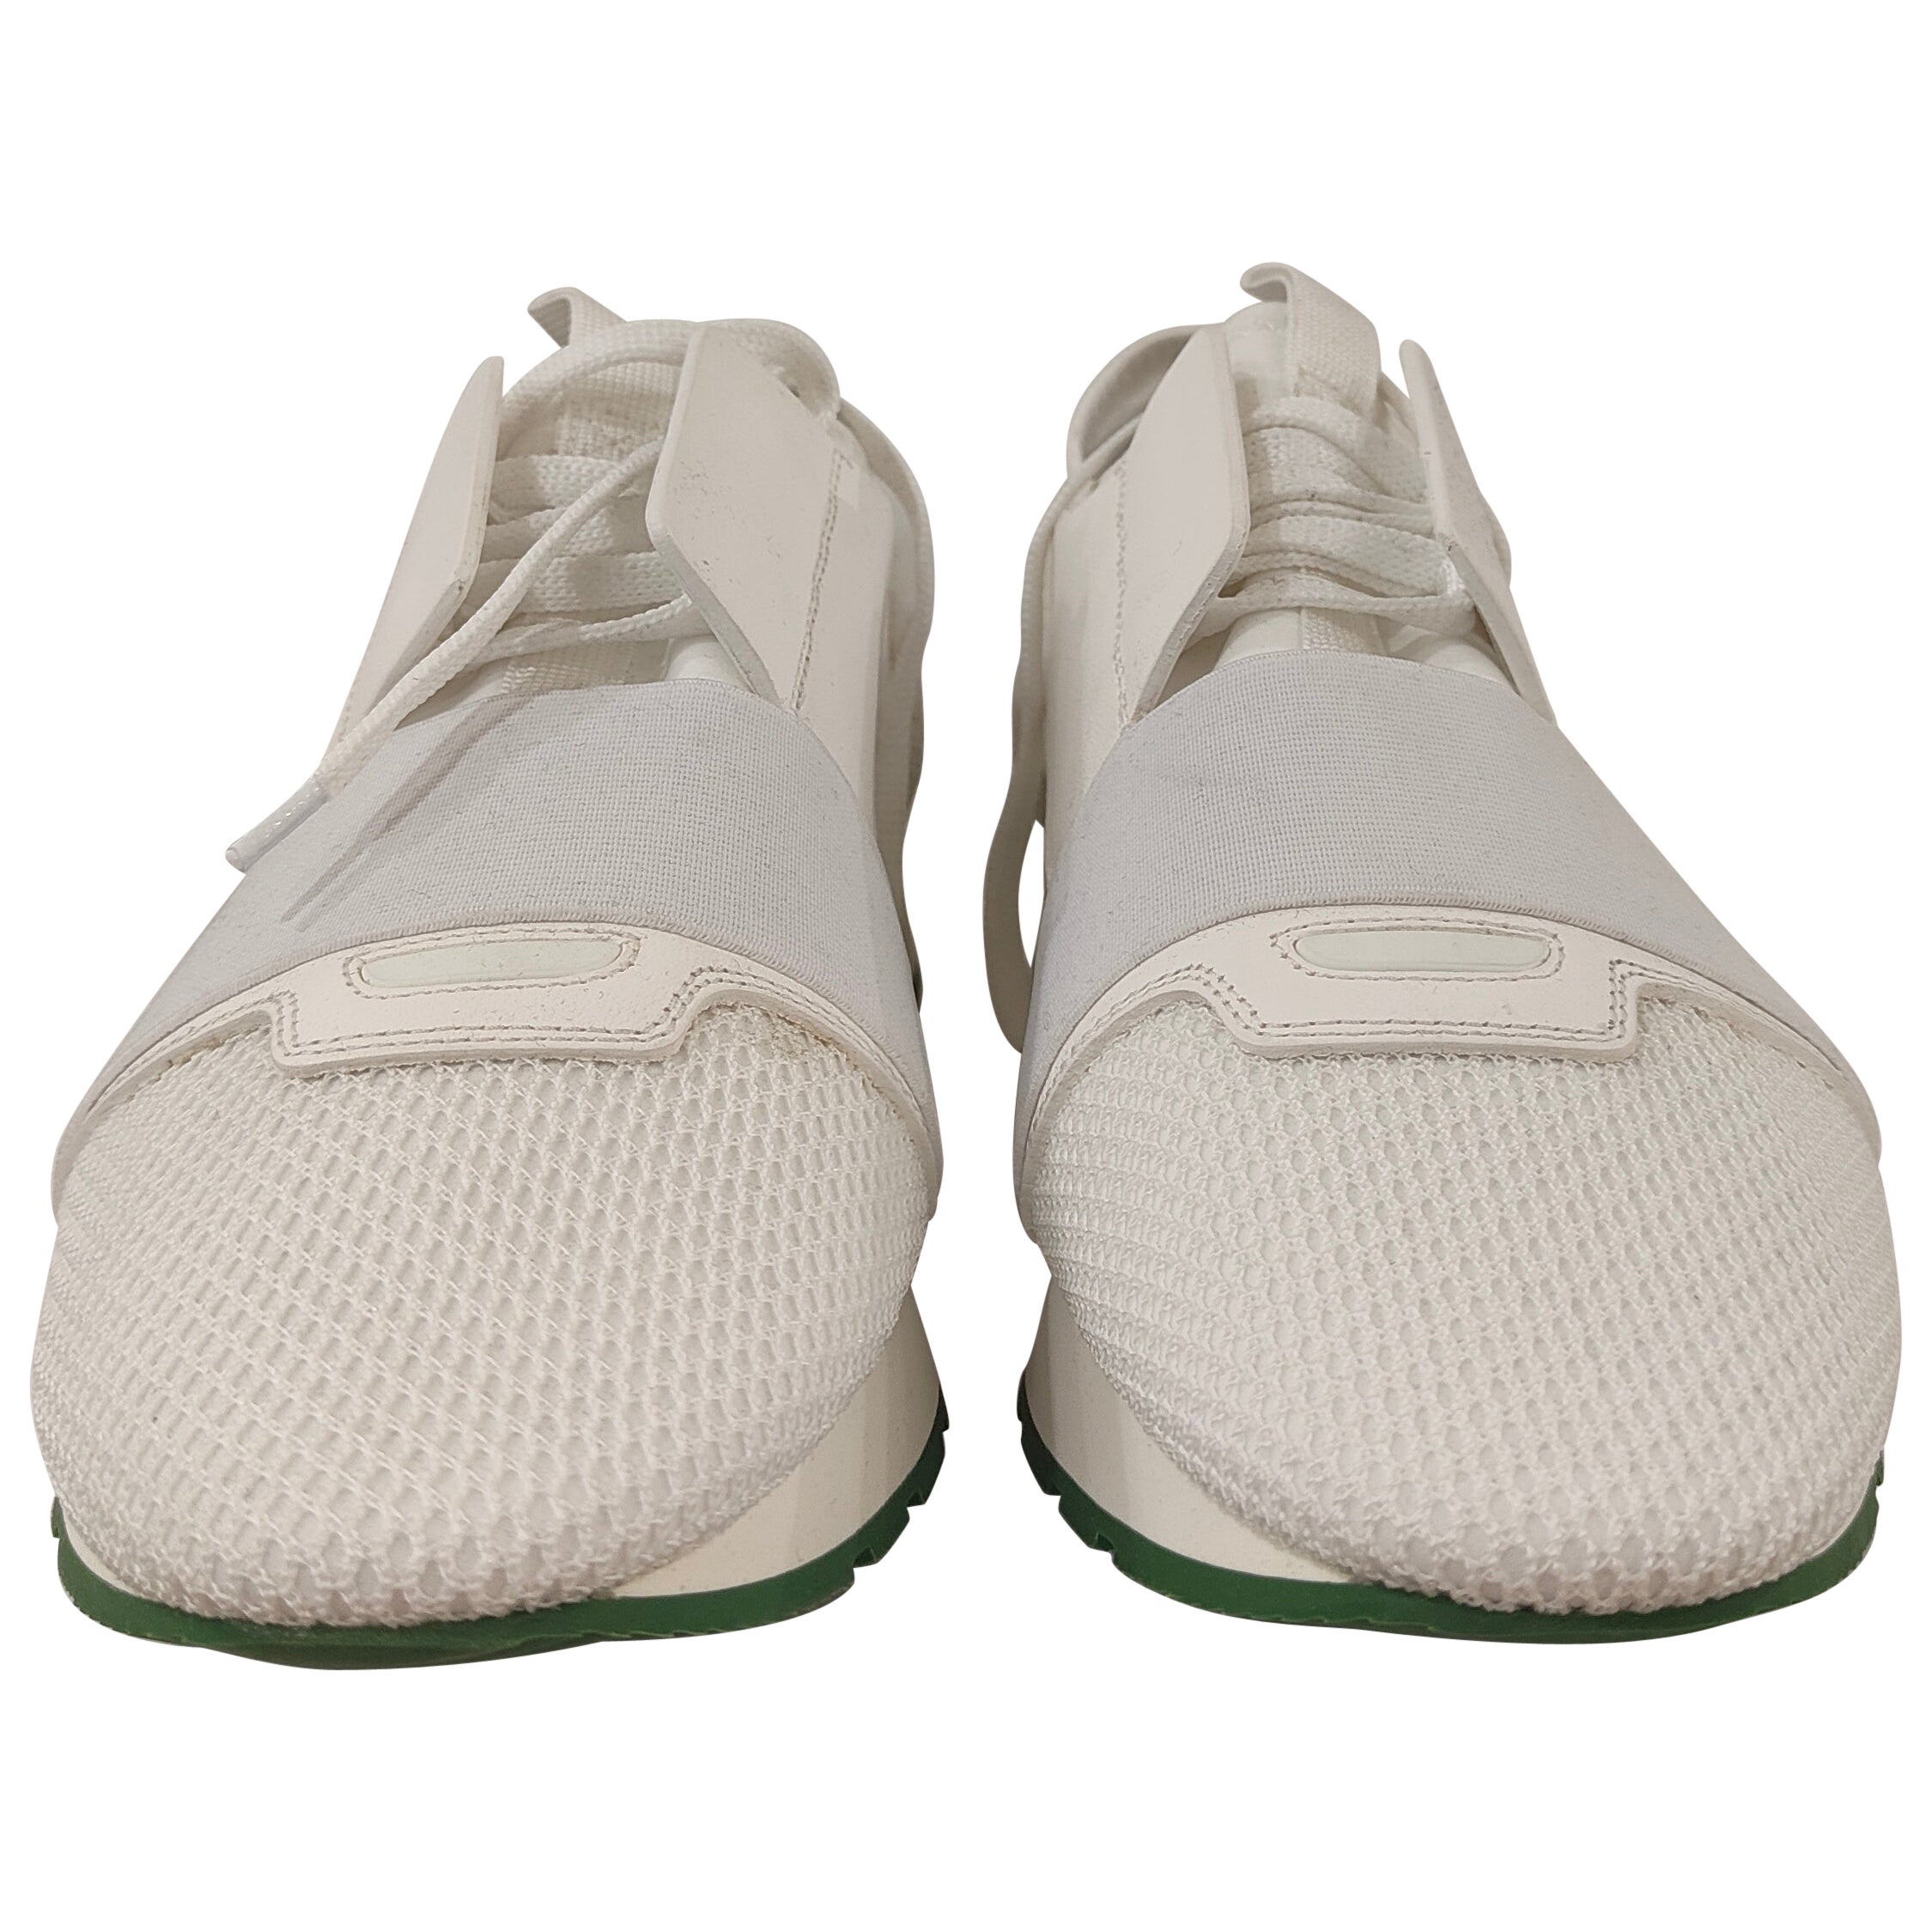 Balenciaga white green men's sneakers NWOT